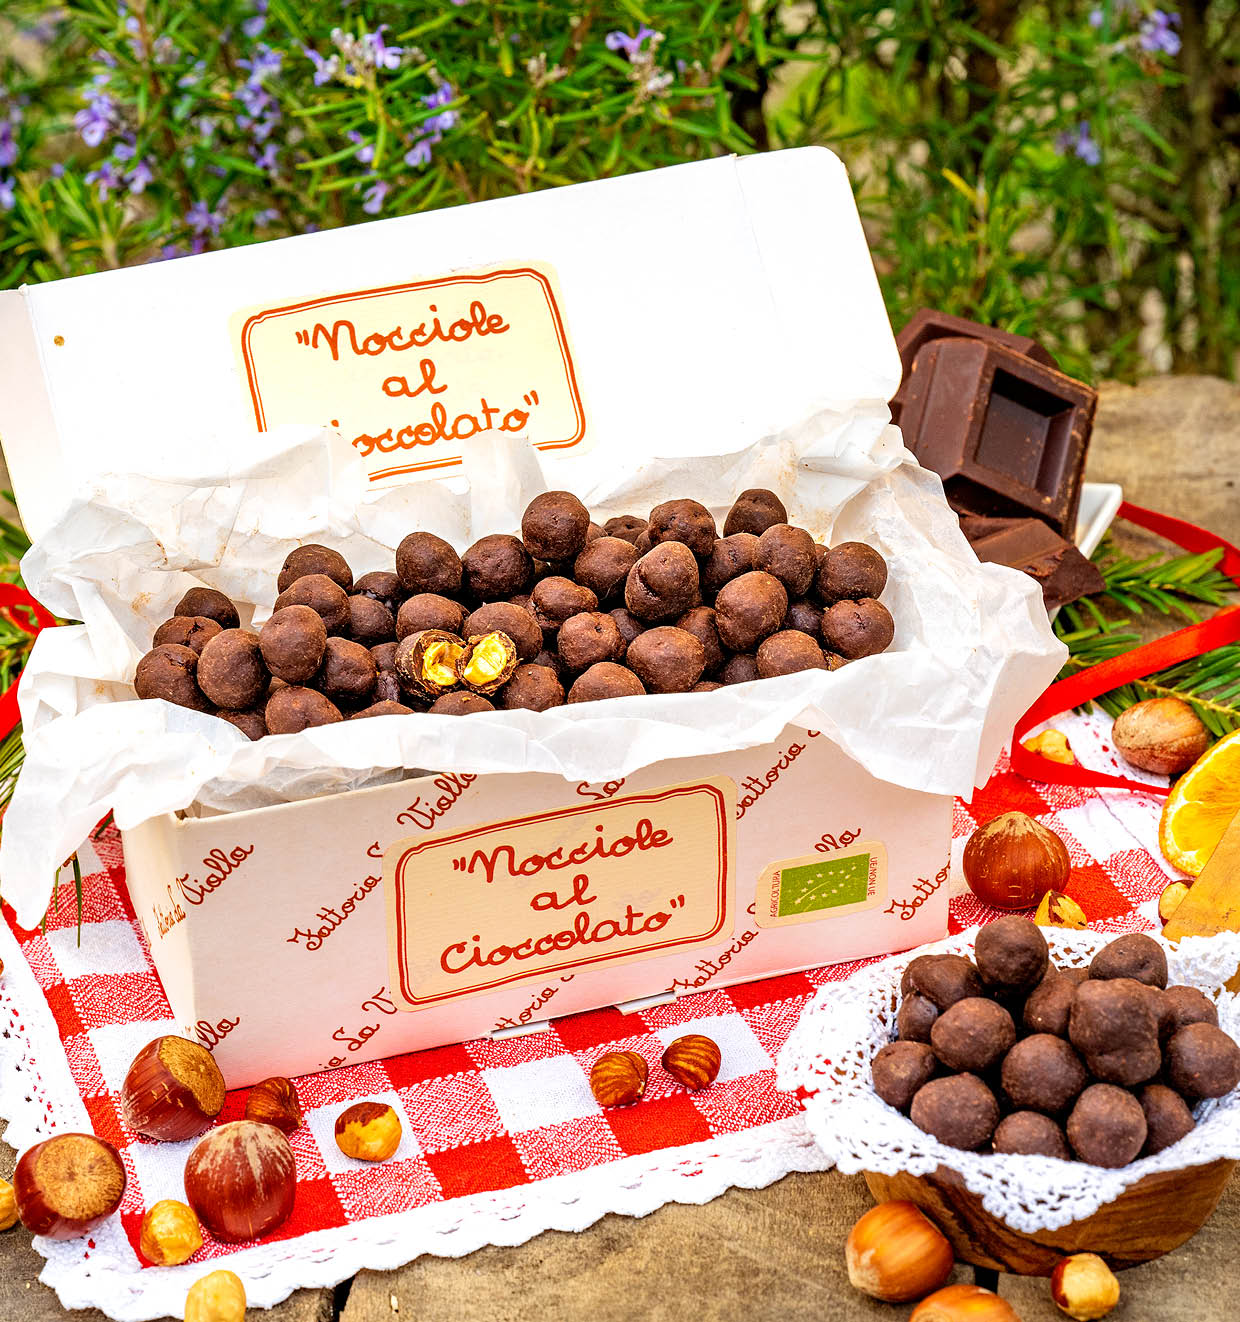 The Organic Chocolate Coated Hazelnuts